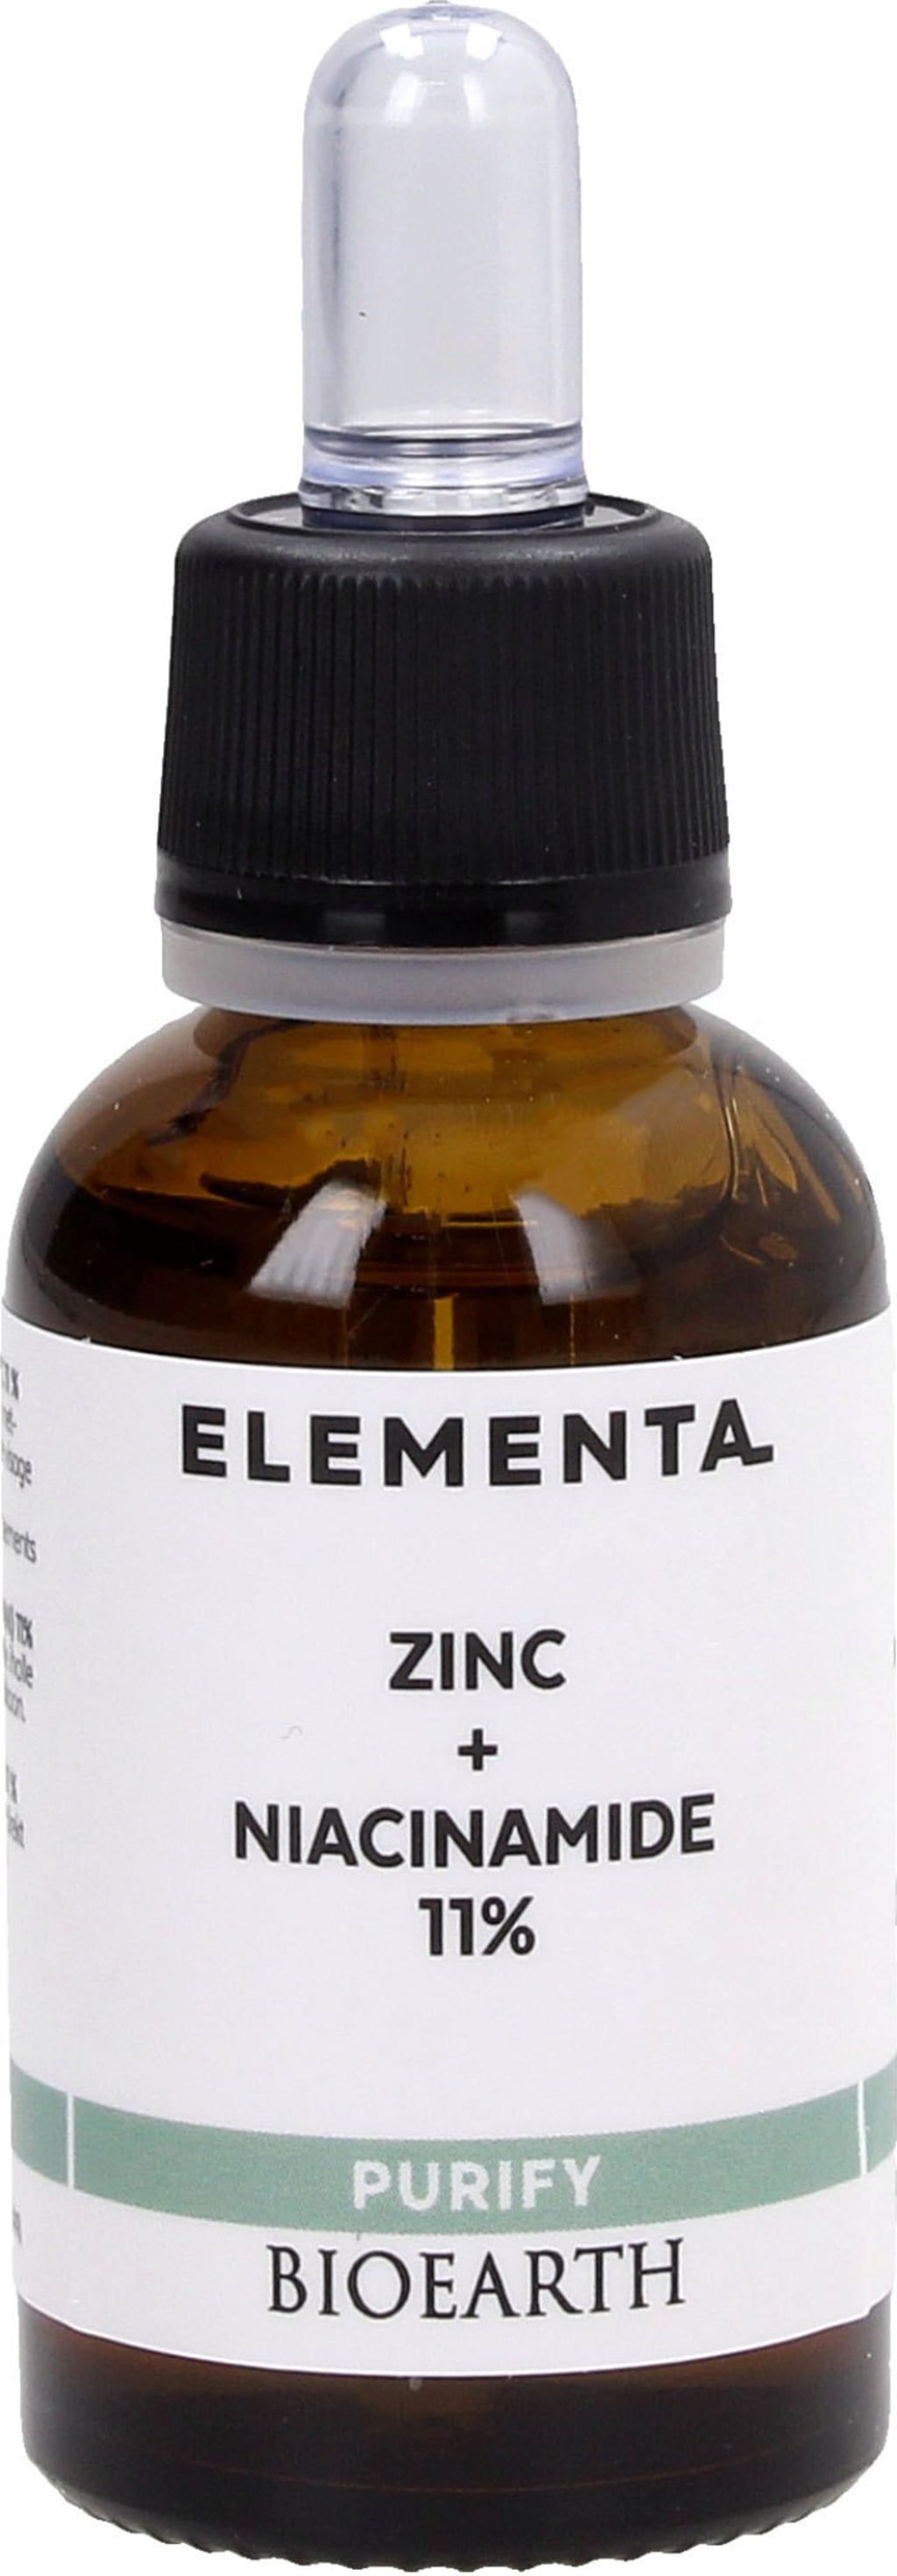 bioearth ELEMENTA PURIFY Zinc + Niacinamida 11% - 30 ml